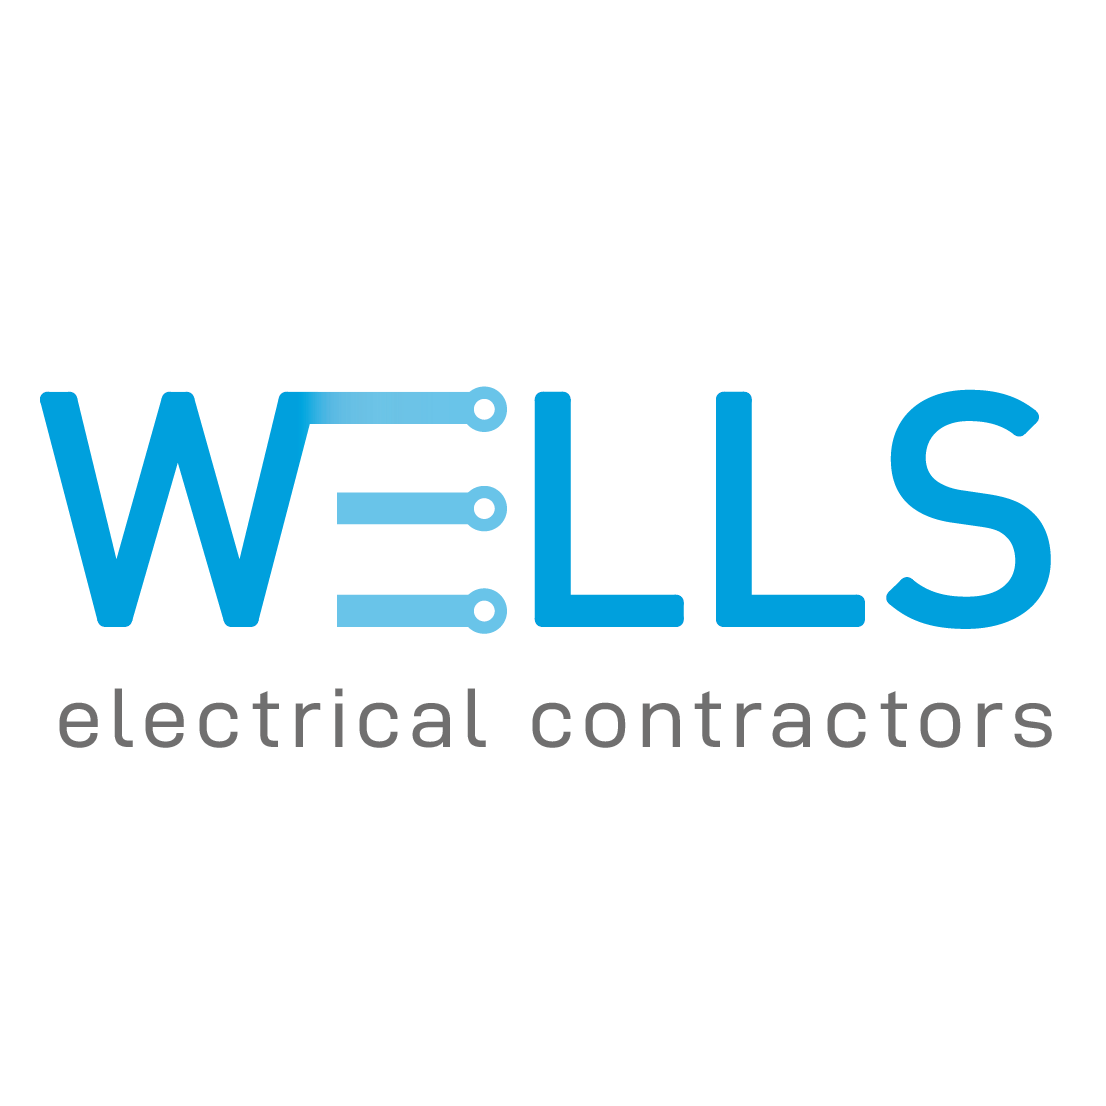 Wells Electrical